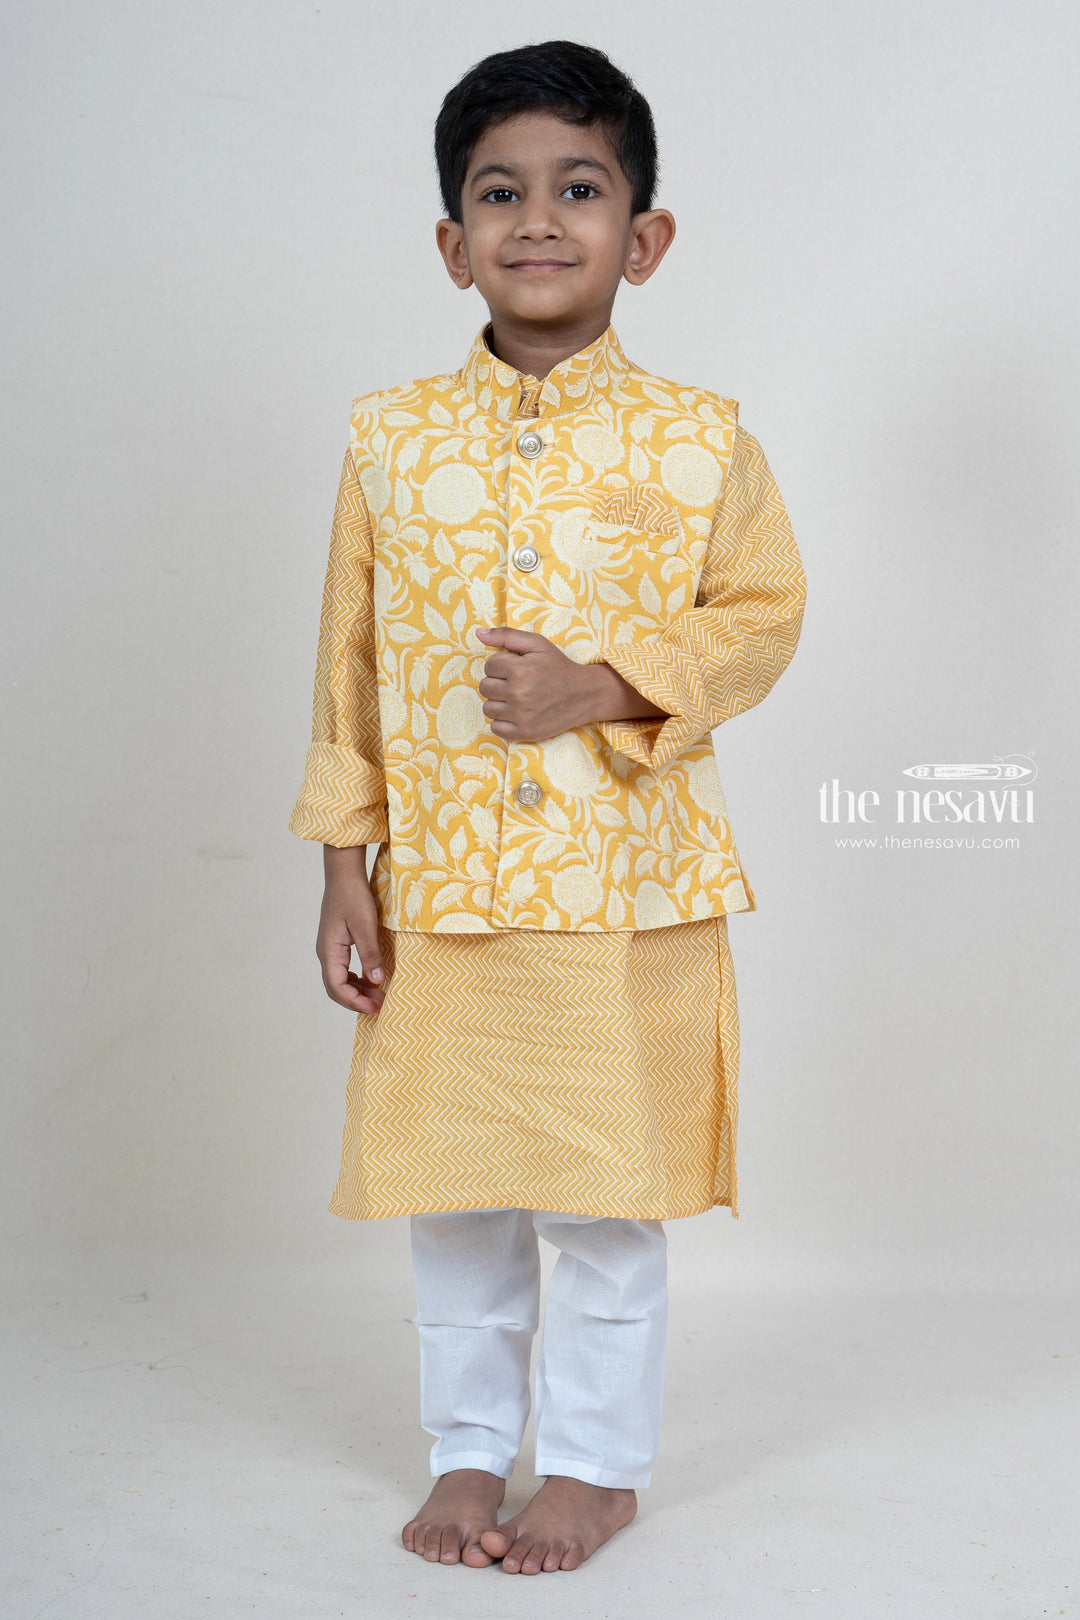 The Nesavu Ethnic Sets Pale Yellow Cotton Overcoat Attached Readymade Kurta Suit For Boys psr silks Nesavu 16 (1Y) / yellow BES215A